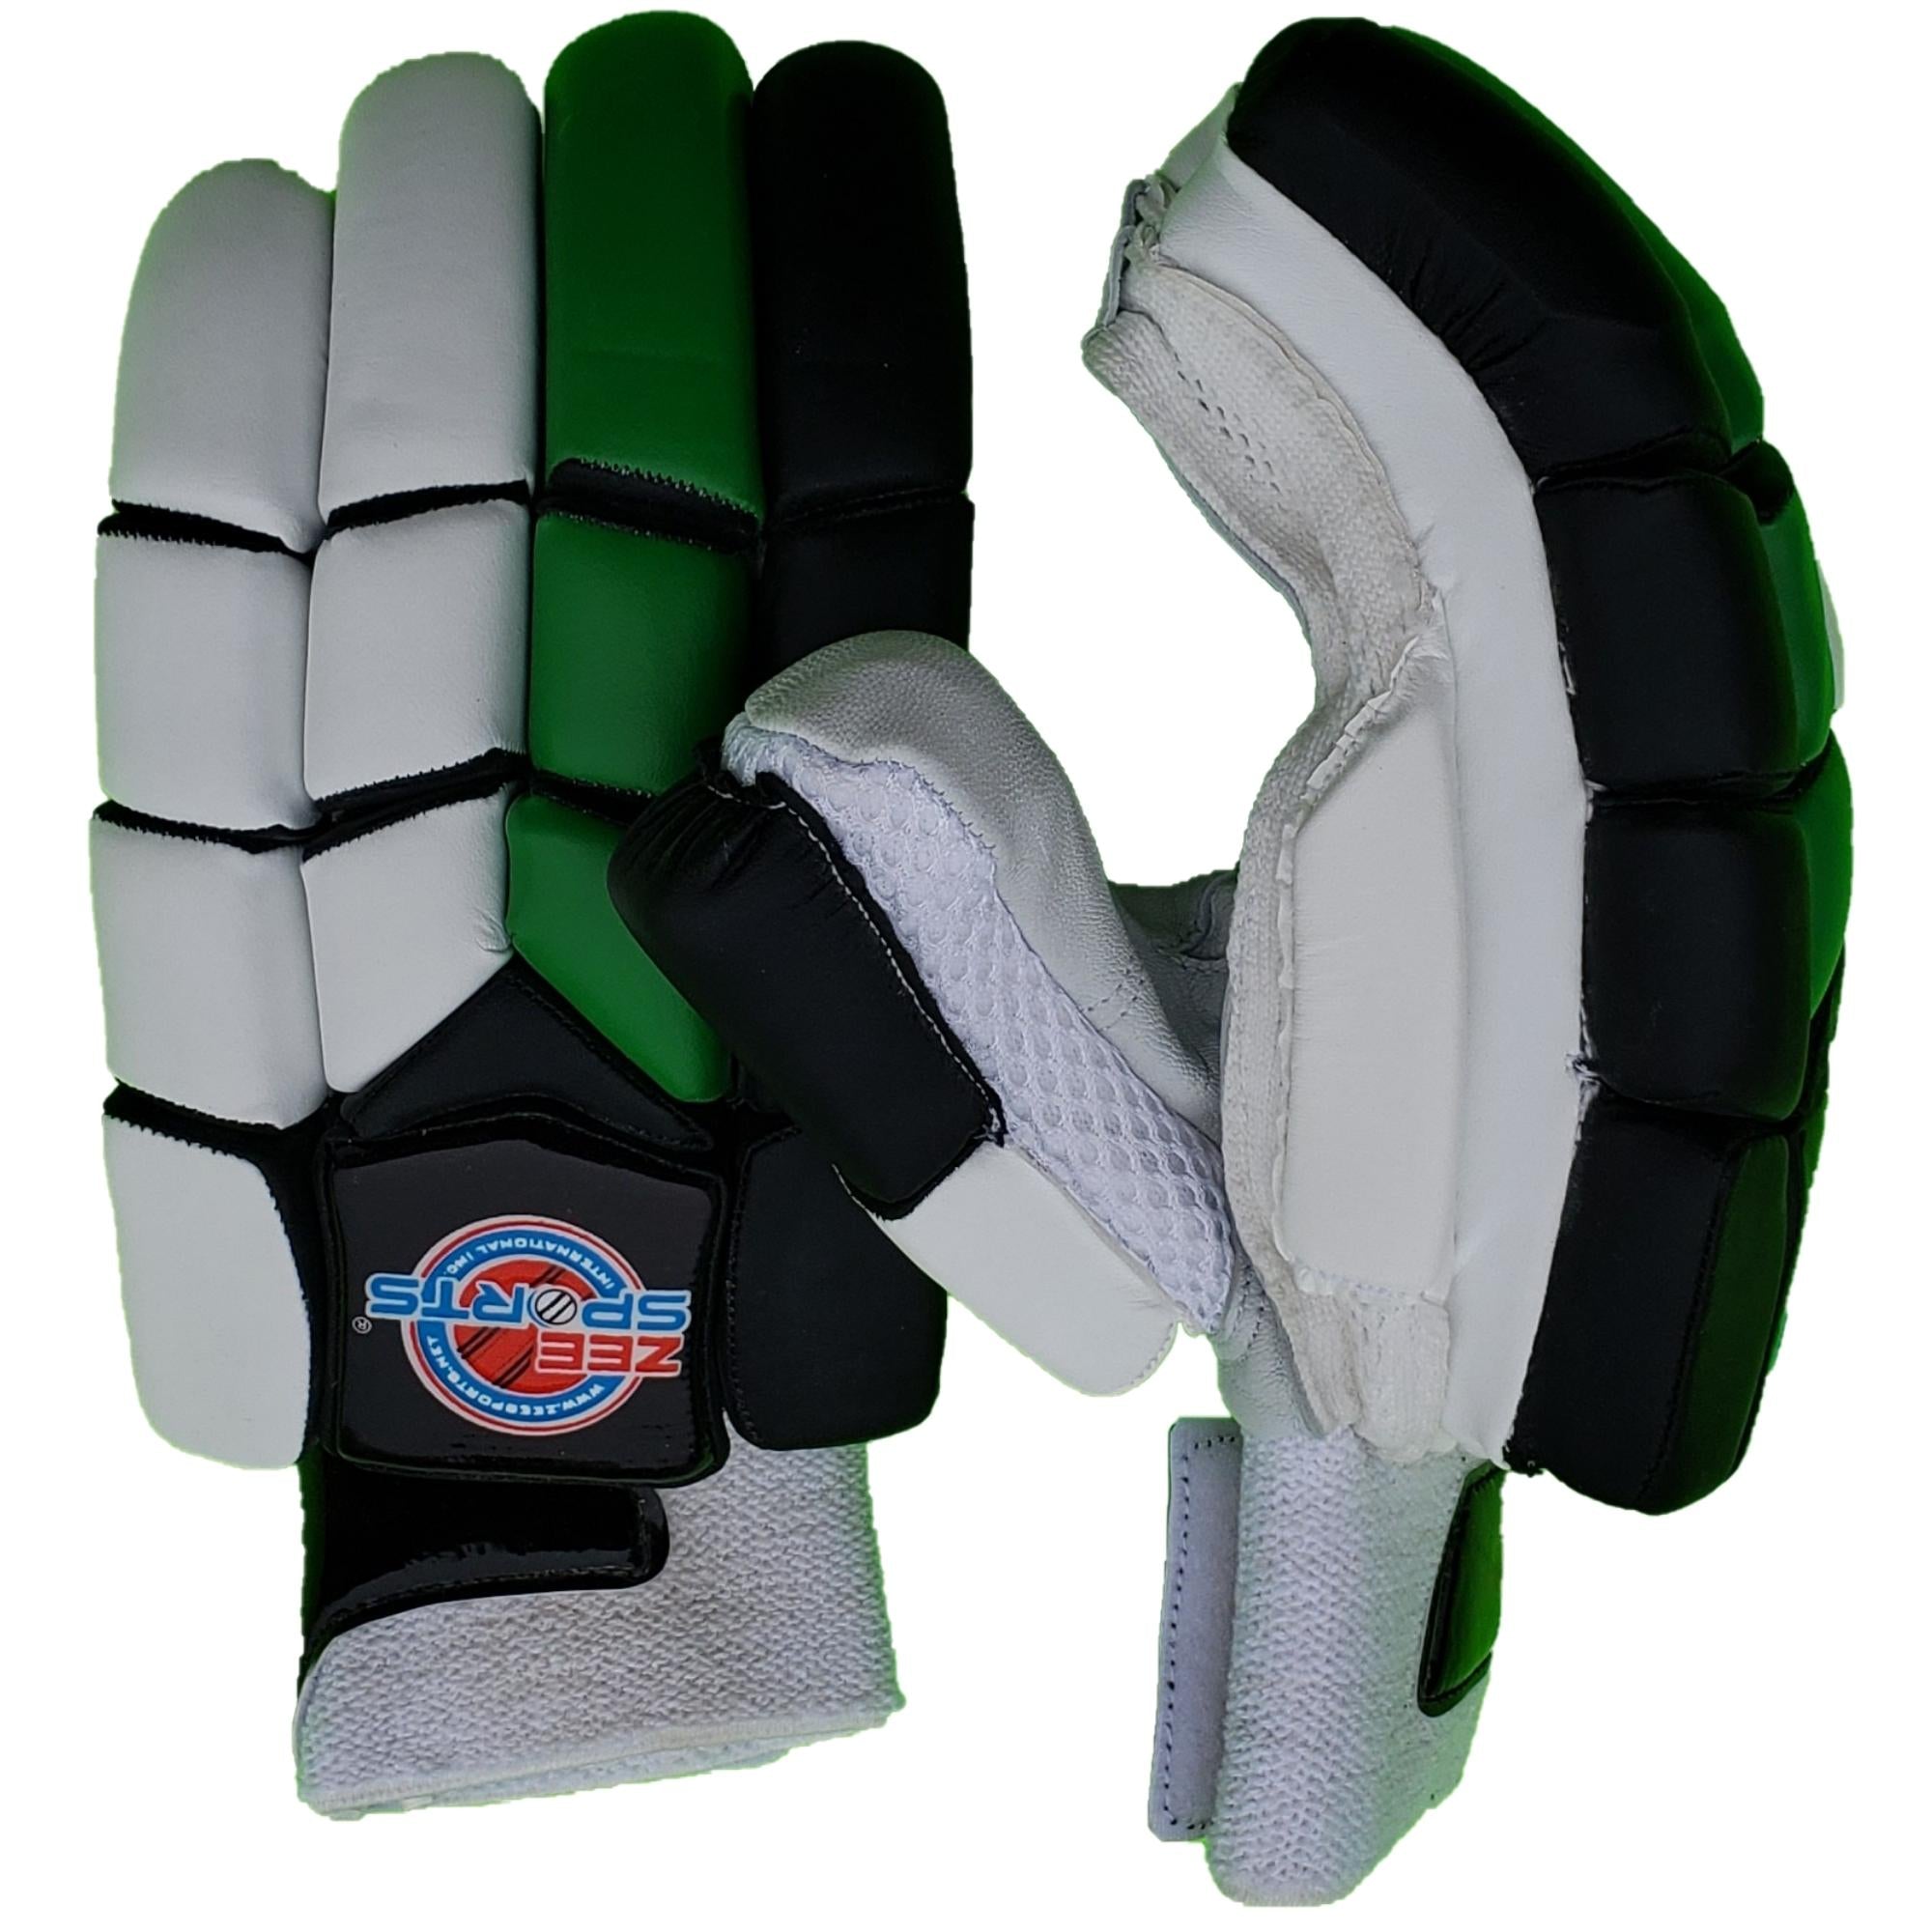 Zee Sports Youth Green Black Batting Gloves